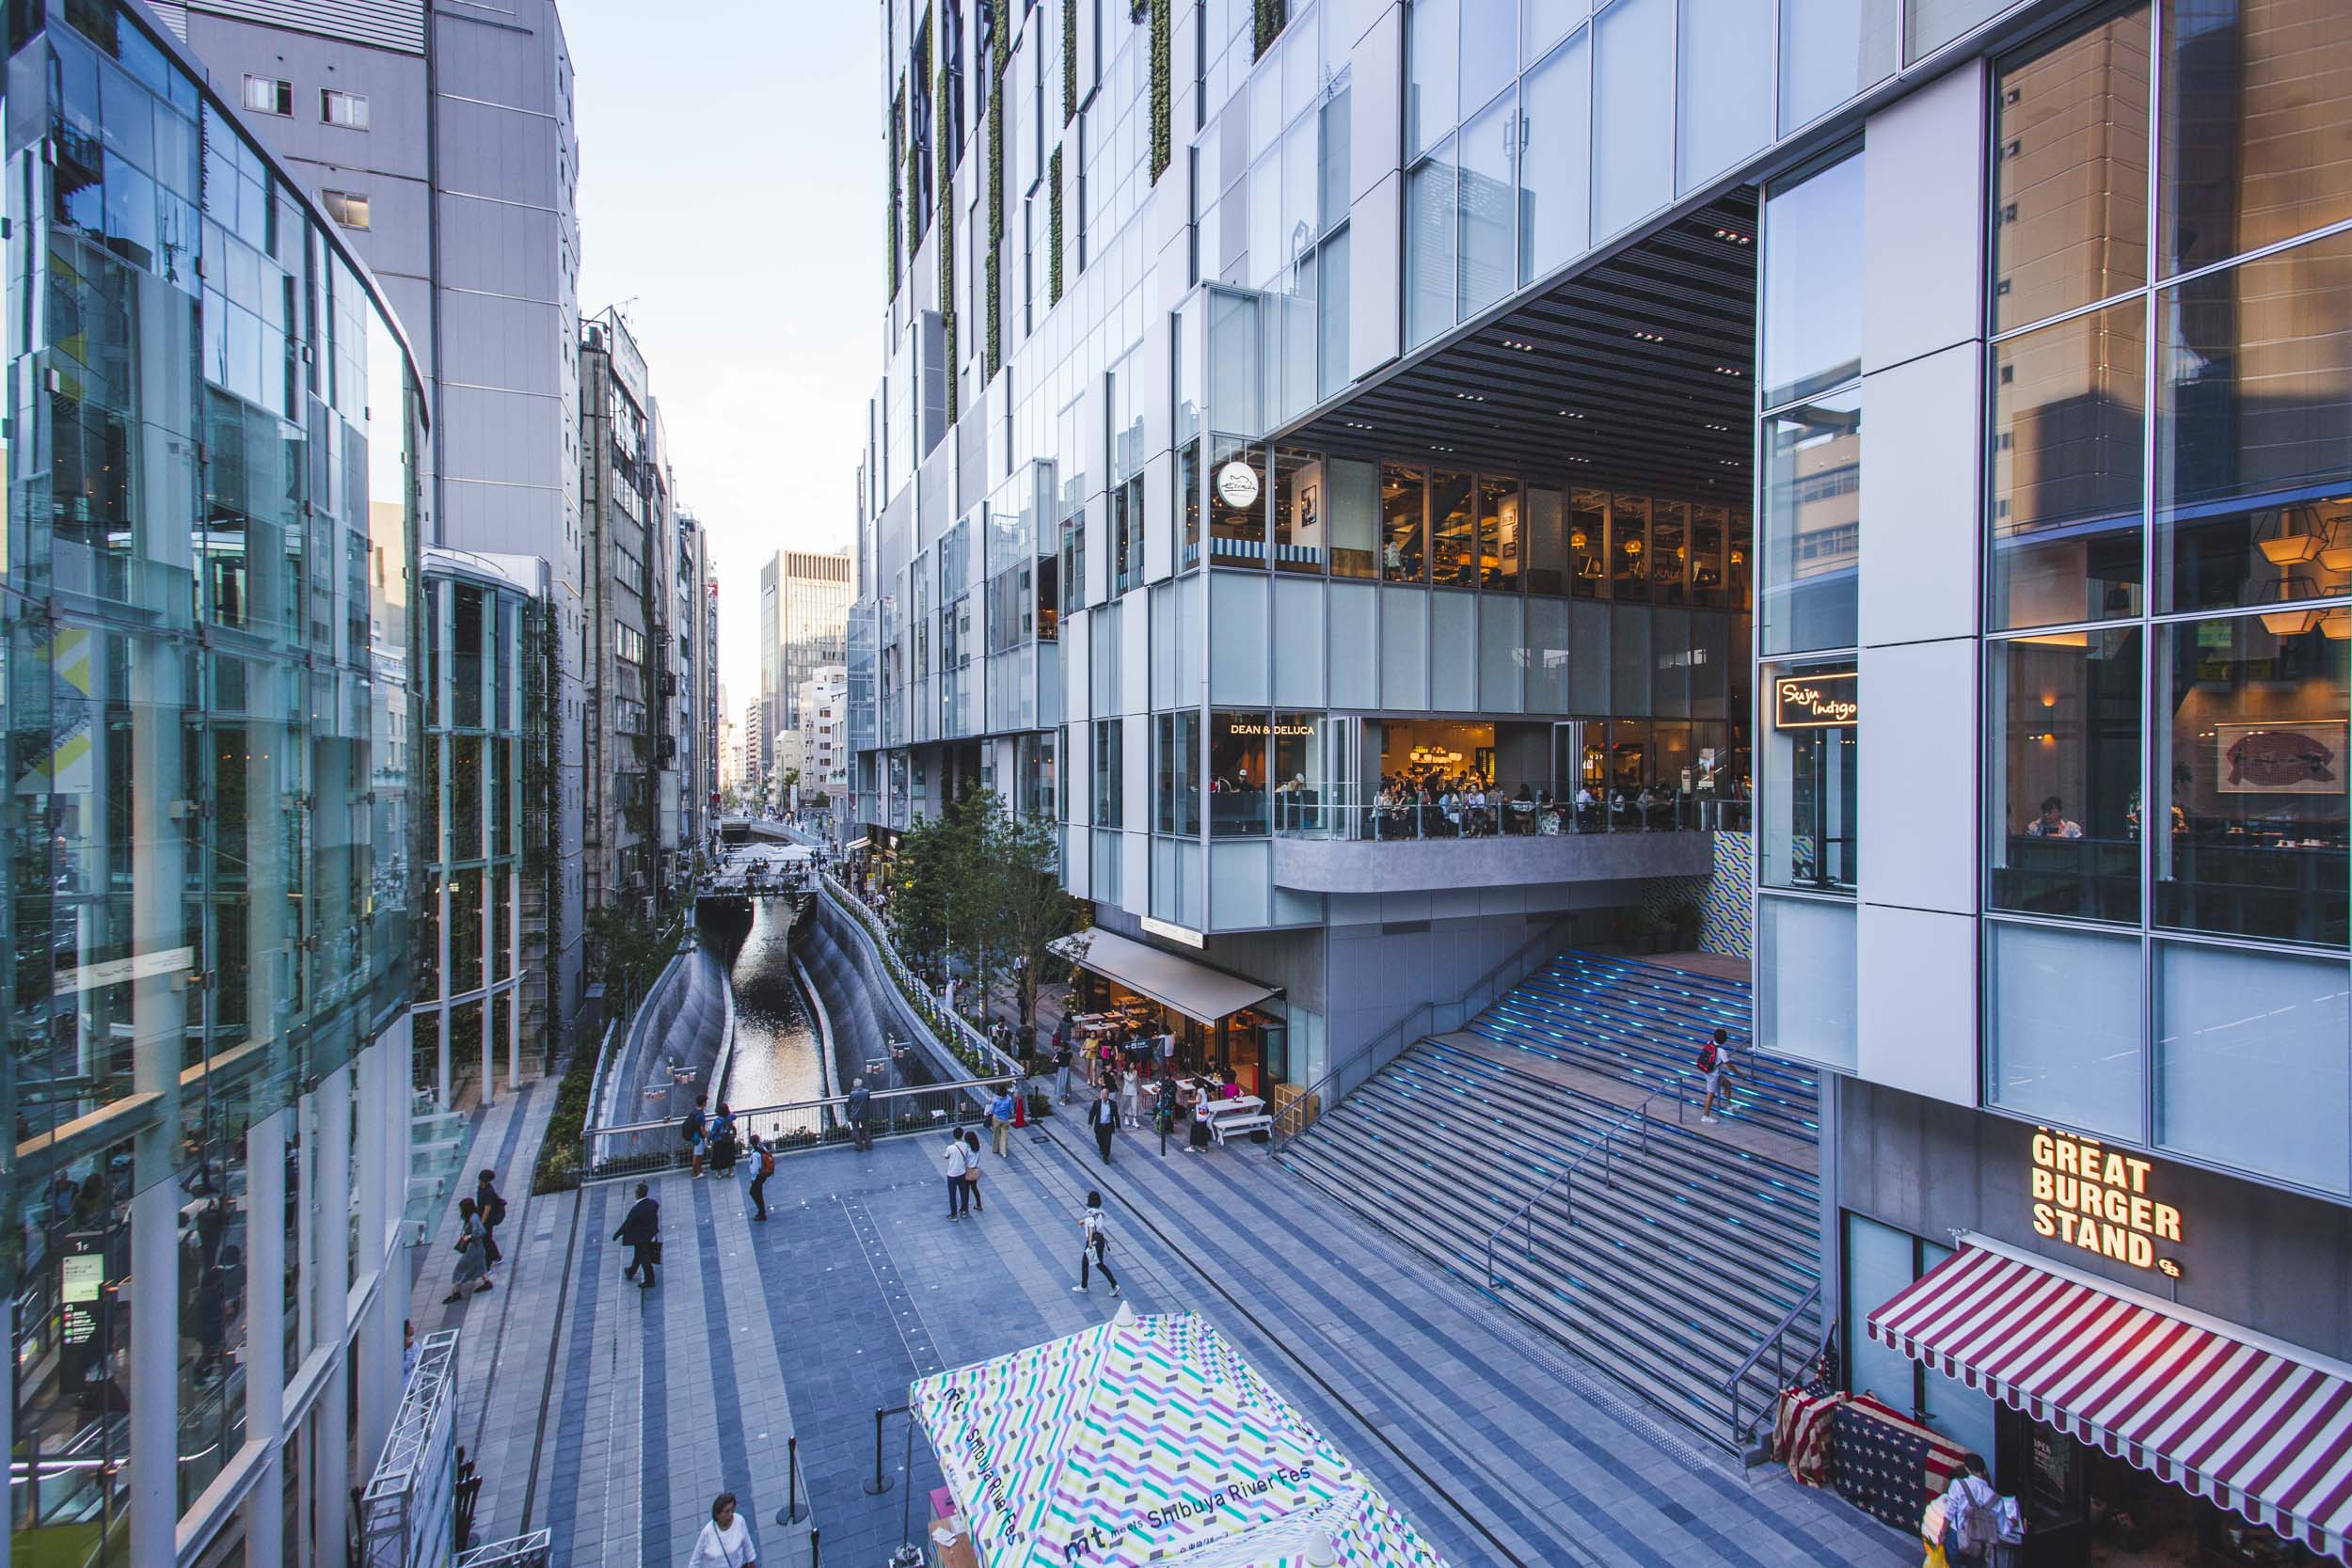 Shibuya Stream Shibuya When In Tokyo Tokyo S Art Design And Architecture Guide